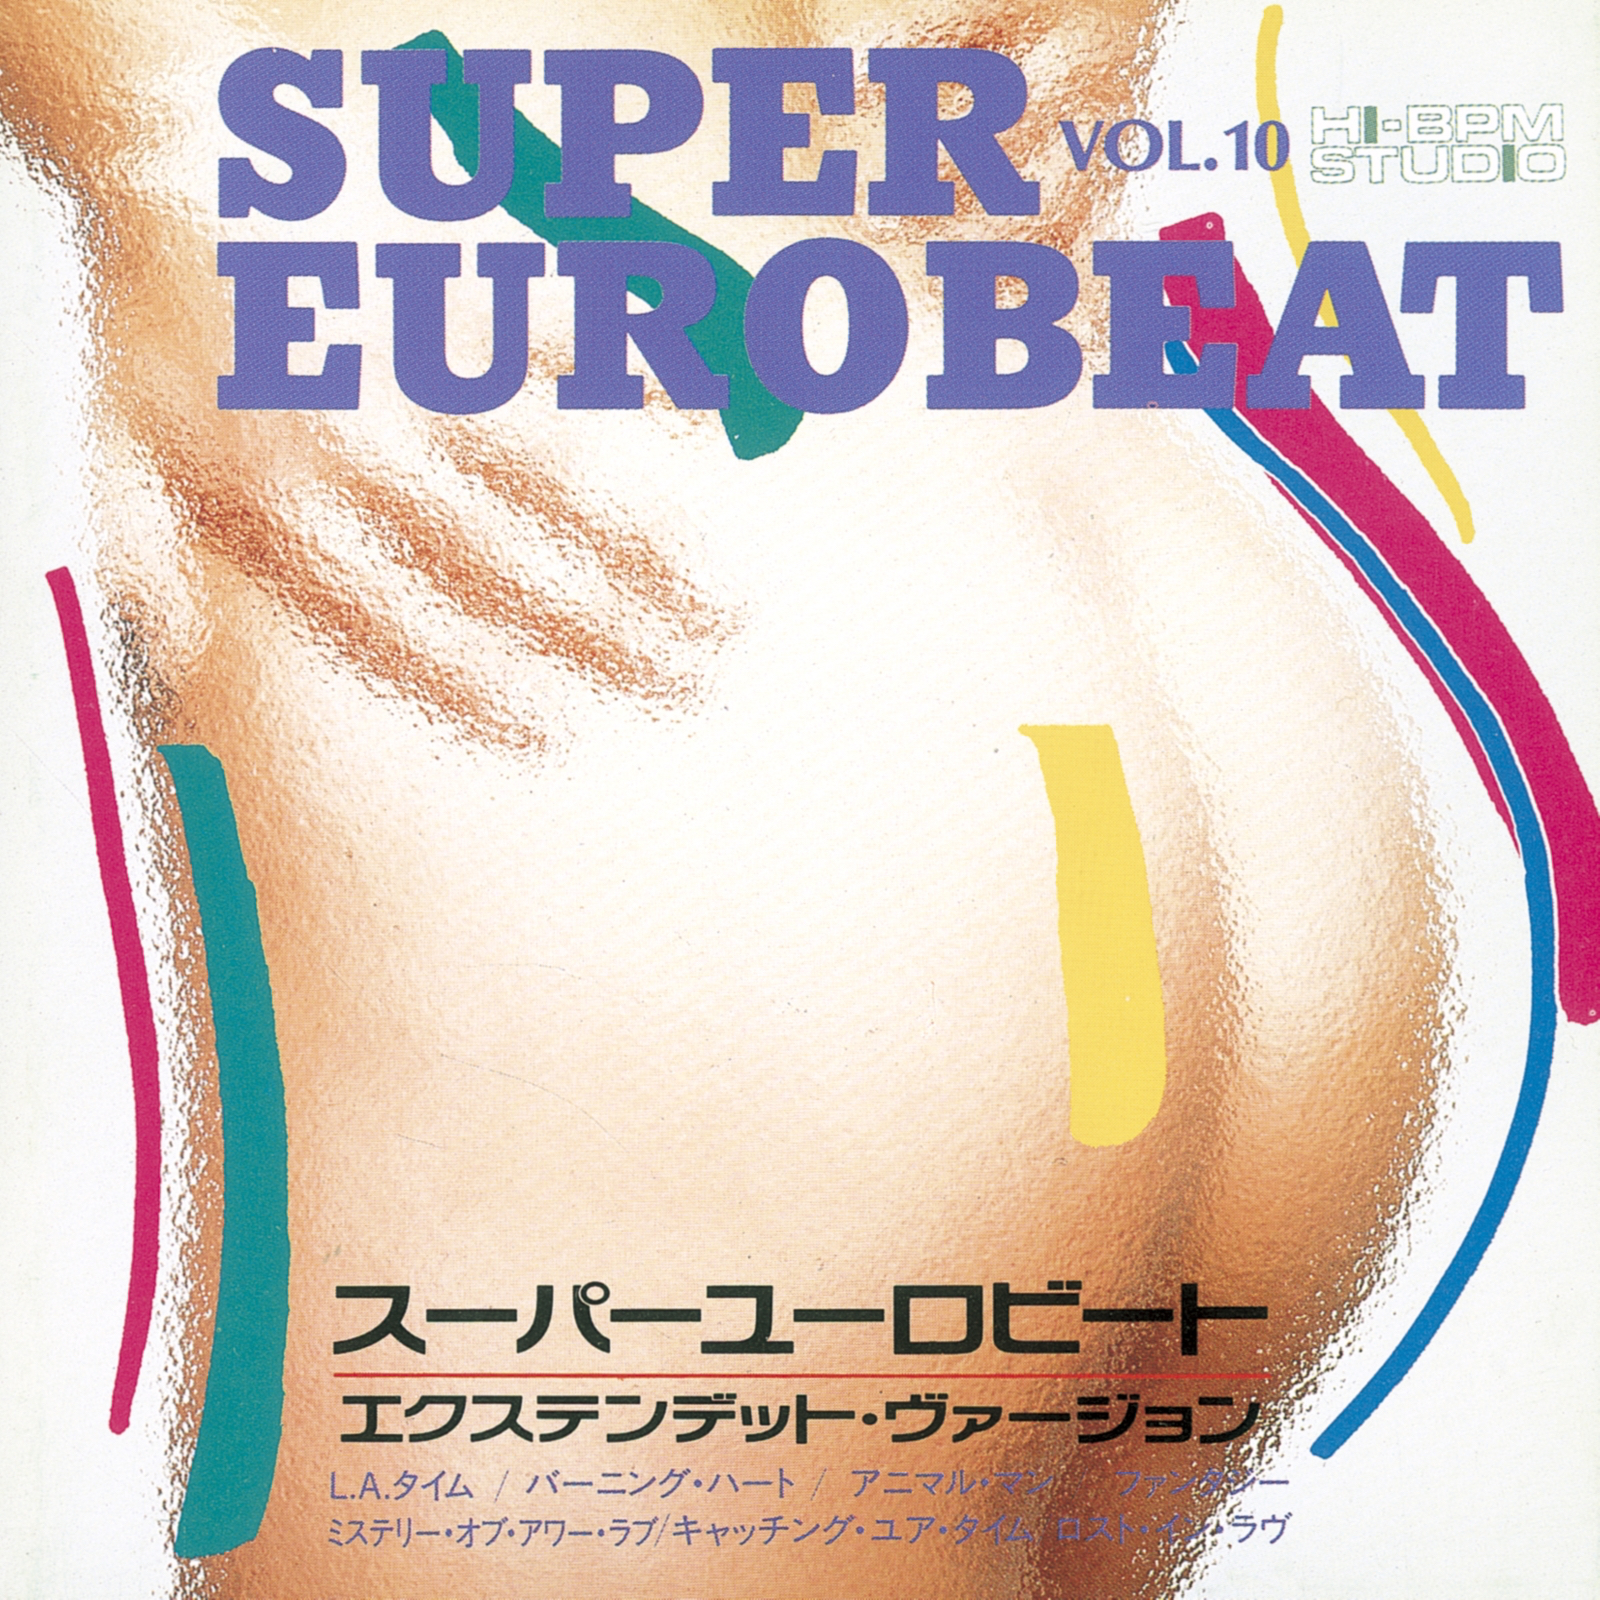 Super Eurobeat Vol. 10 | Eurobeat Wiki | Fandom